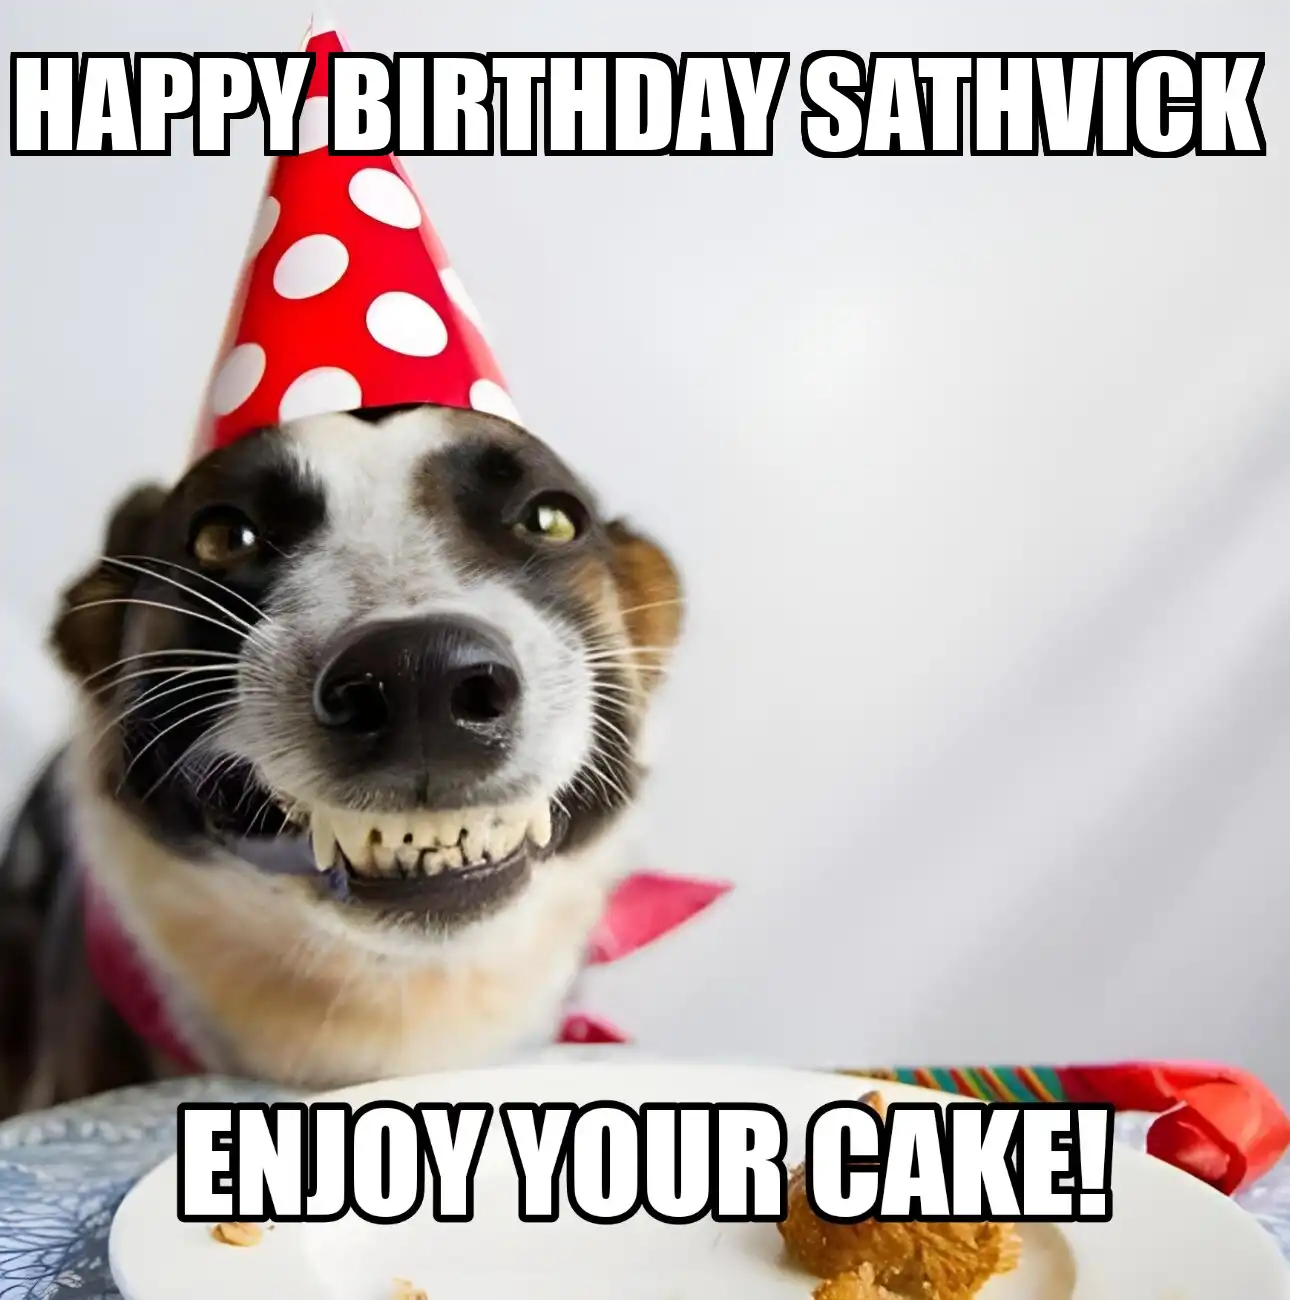 Happy Birthday Sathvick Enjoy Your Cake Dog Meme